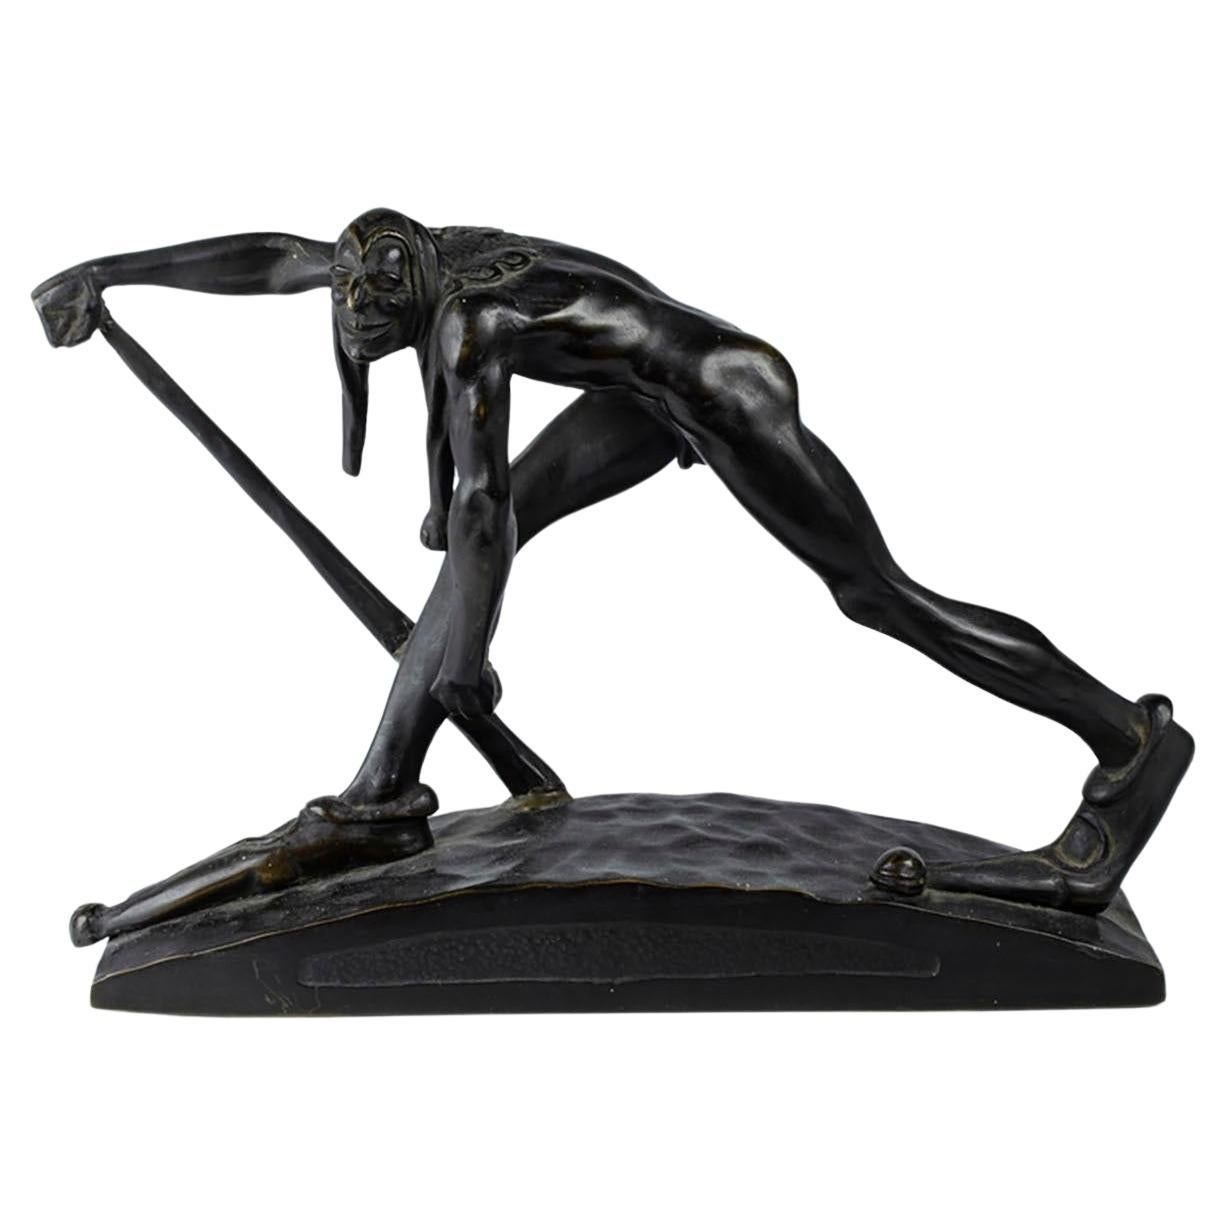 Figura en Bronce patinado de Paul Rosanowski "Narr" 20th Century For Sale